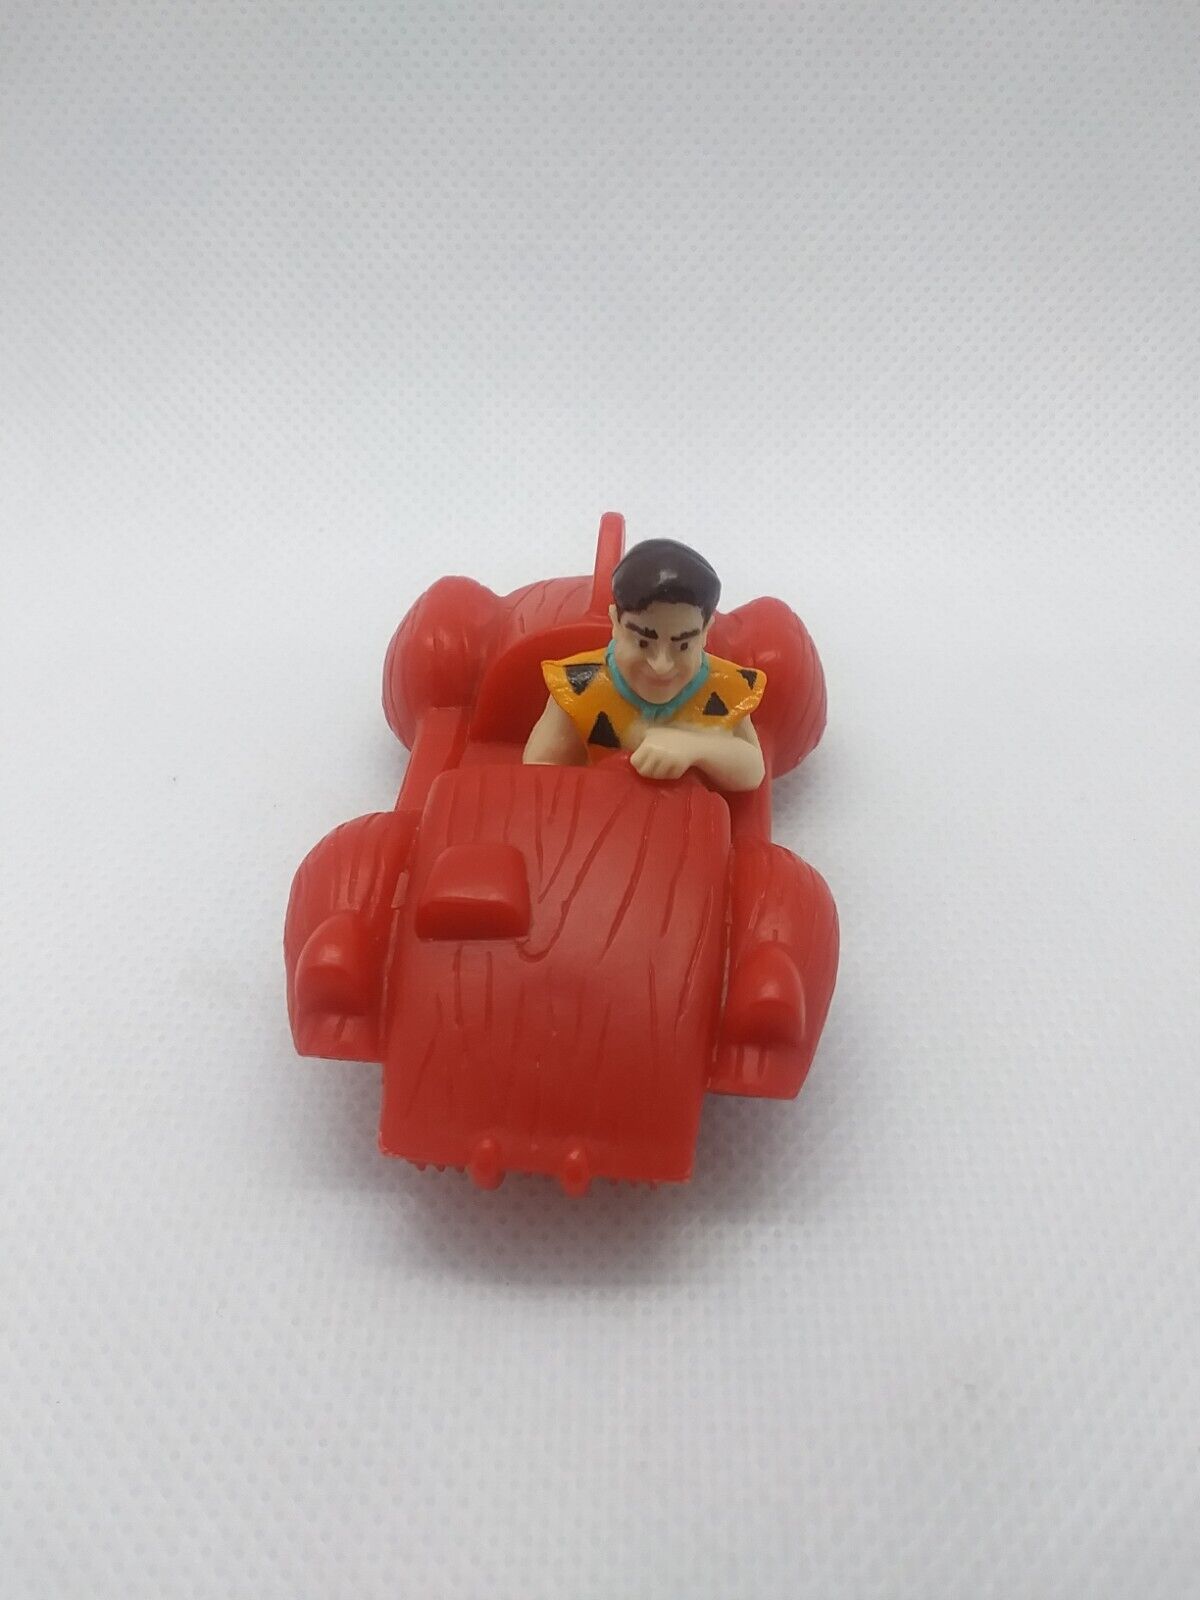 Vintage U.C.S & Amblin 1993 Fred Flintstones Movie Promo Red Toy Car